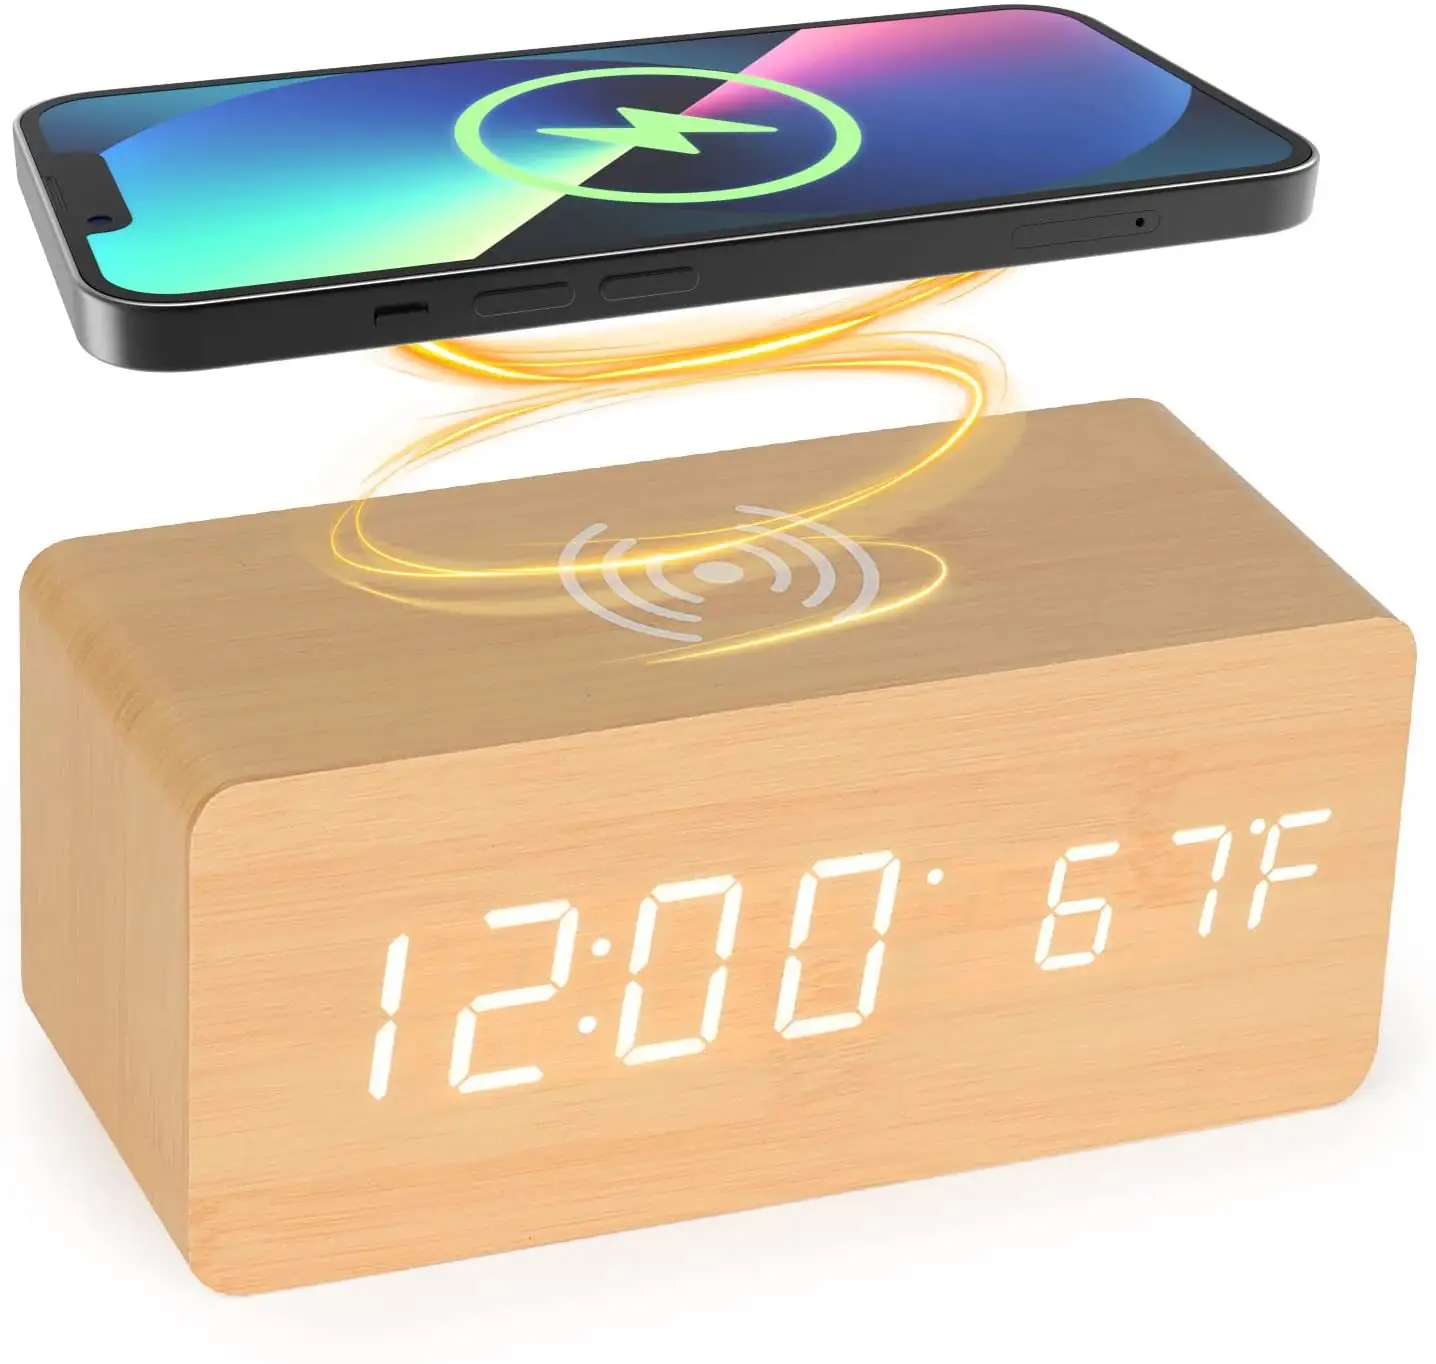 Hot Selling Home Electronic Wooden LED Light Display Alarm Clock Bedside Qi Wireless Charging Digital Wood Clock